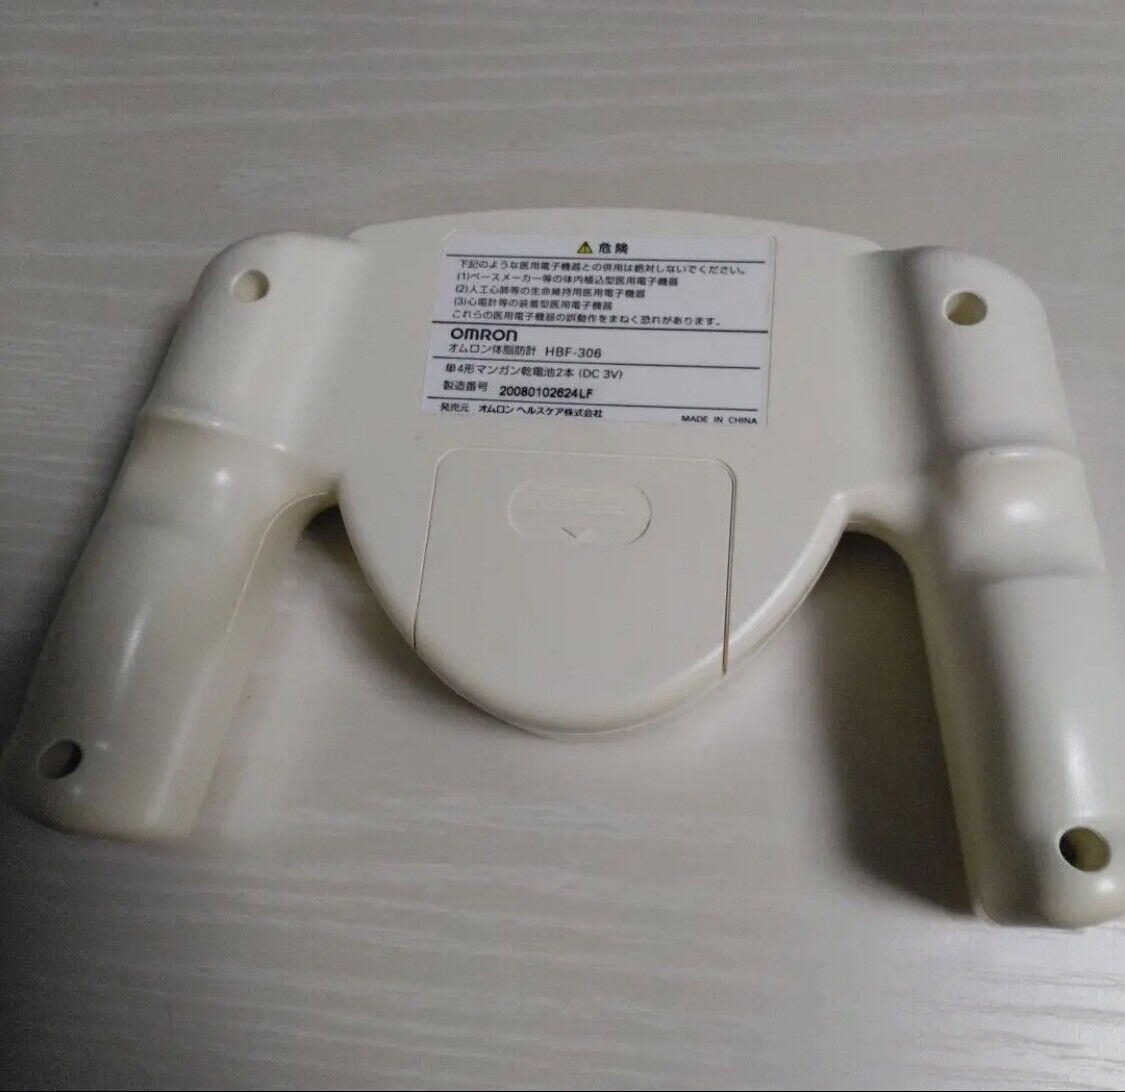 HBF-306 USED Omron HBF-306 Body Fat Monitor WHITE USED Japanese